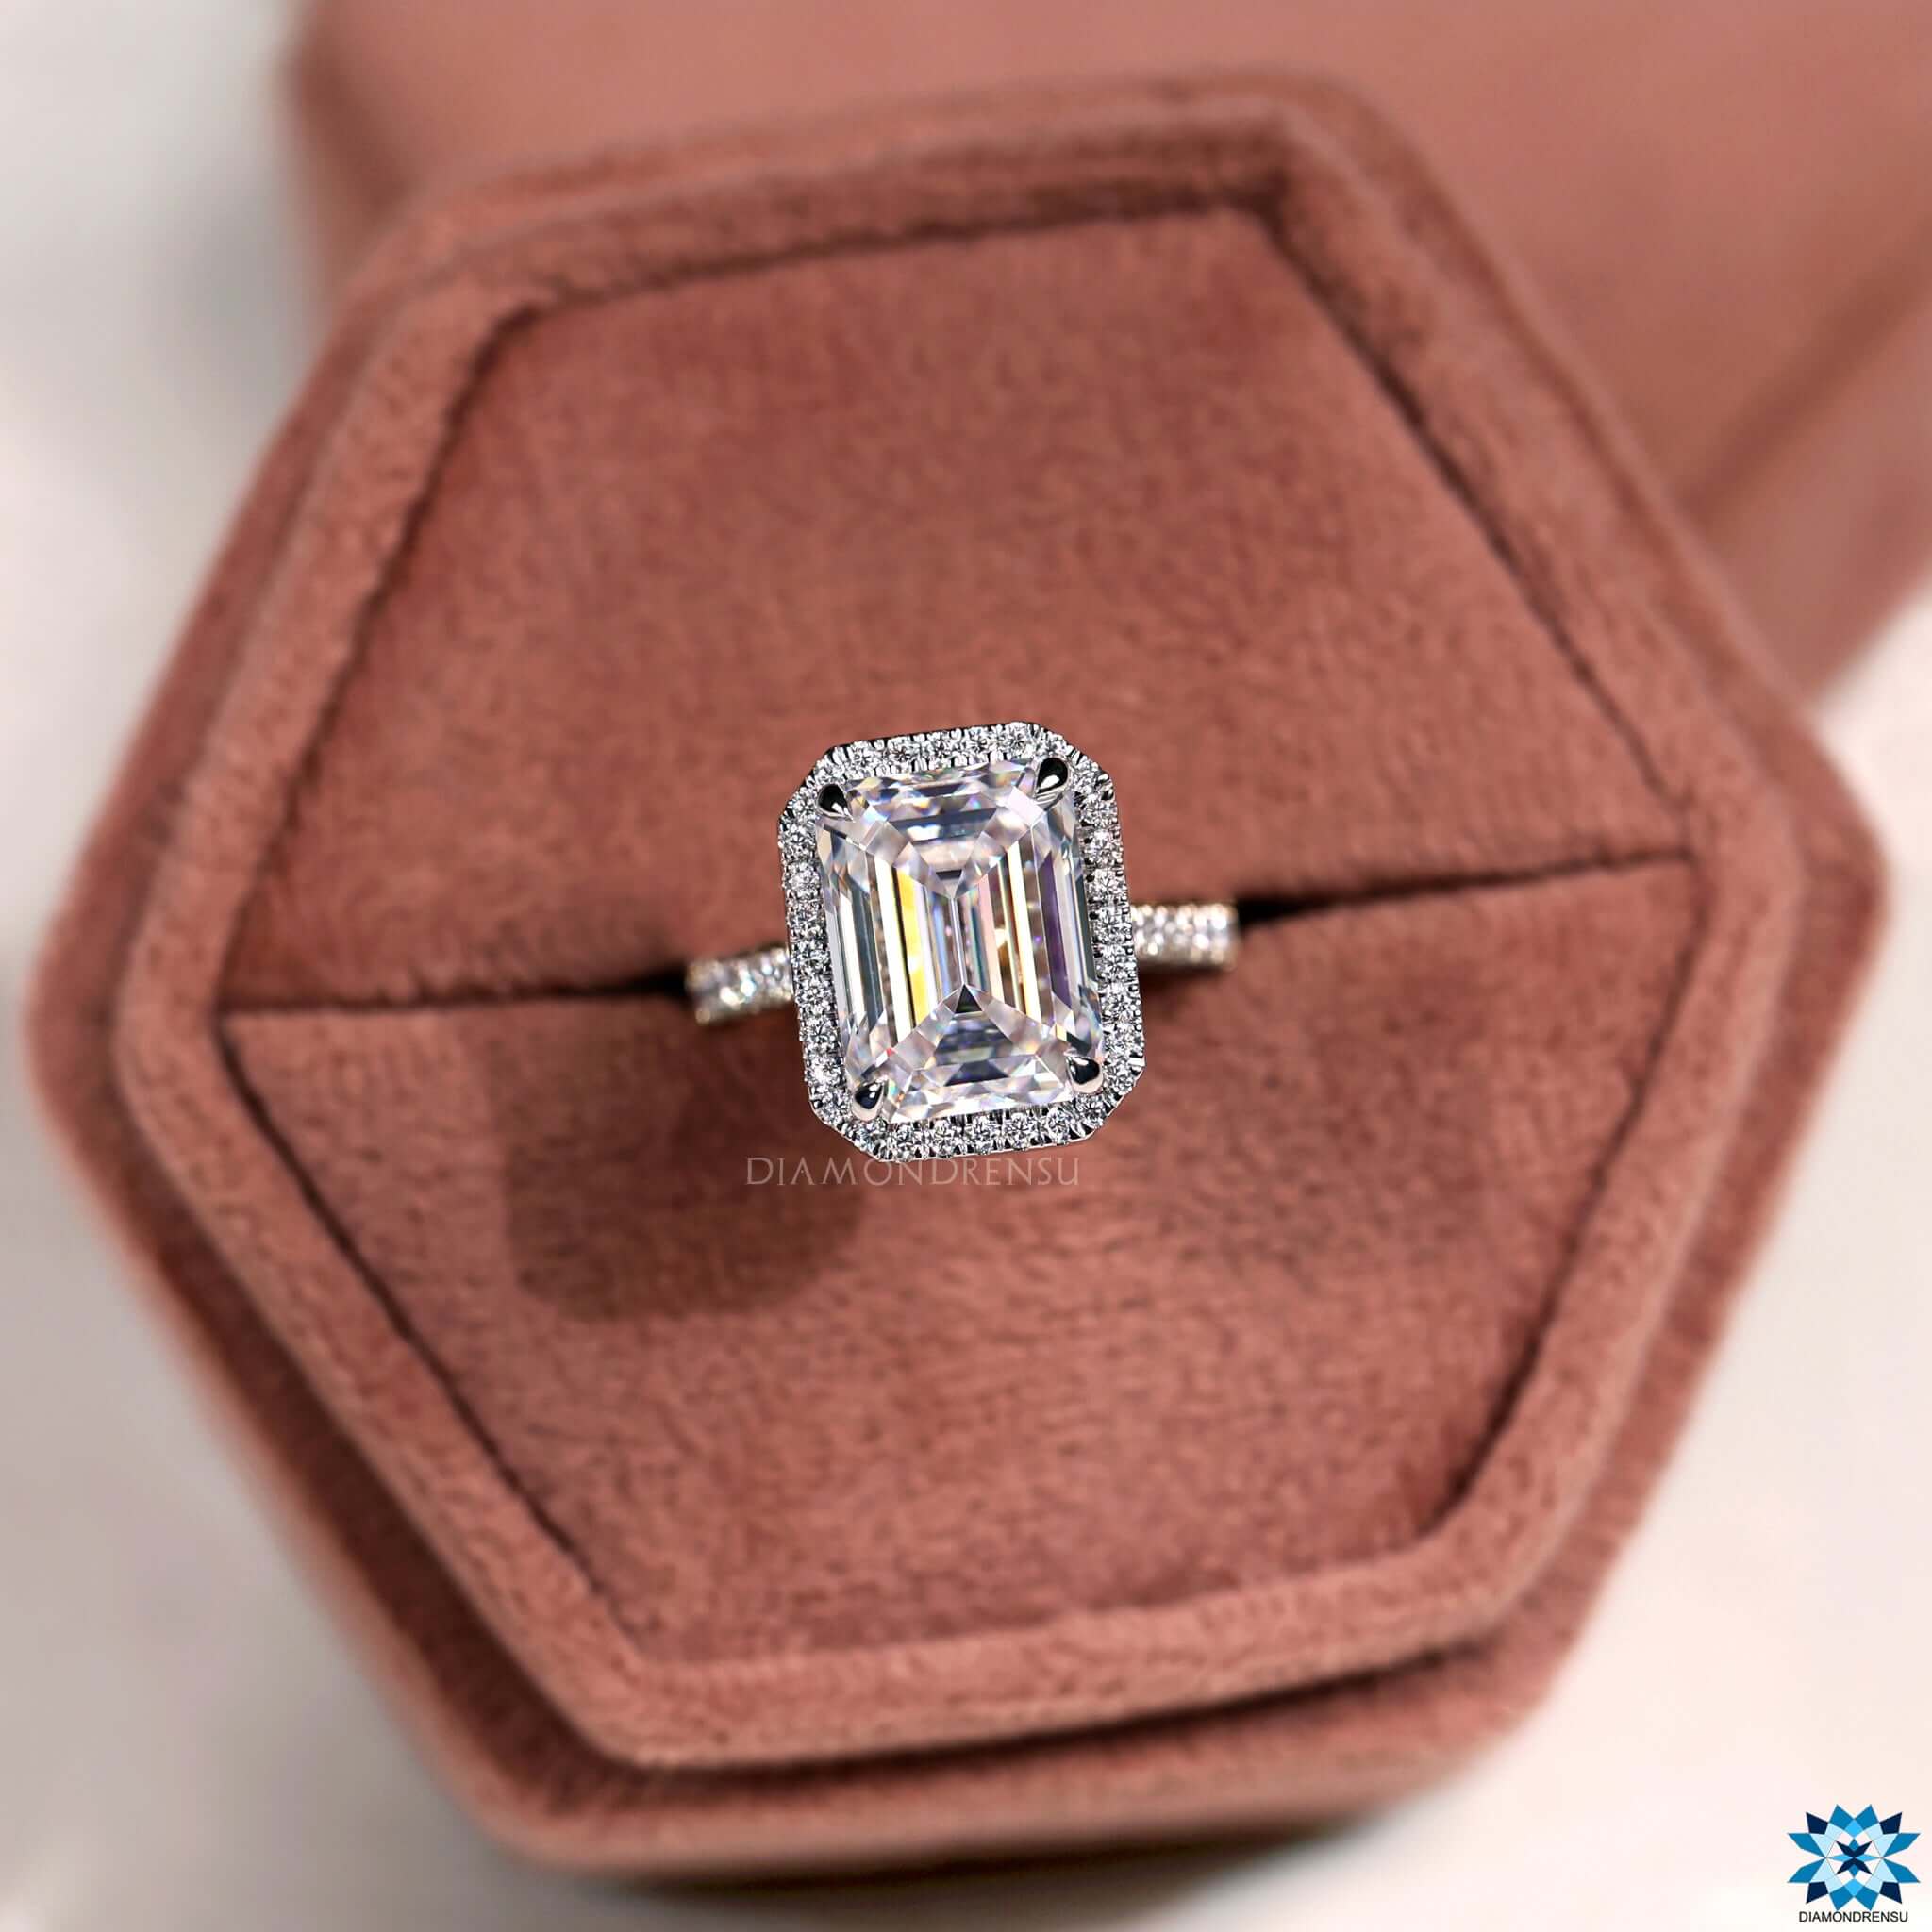 moissanite emerald cut engagement ring - diamondrensu